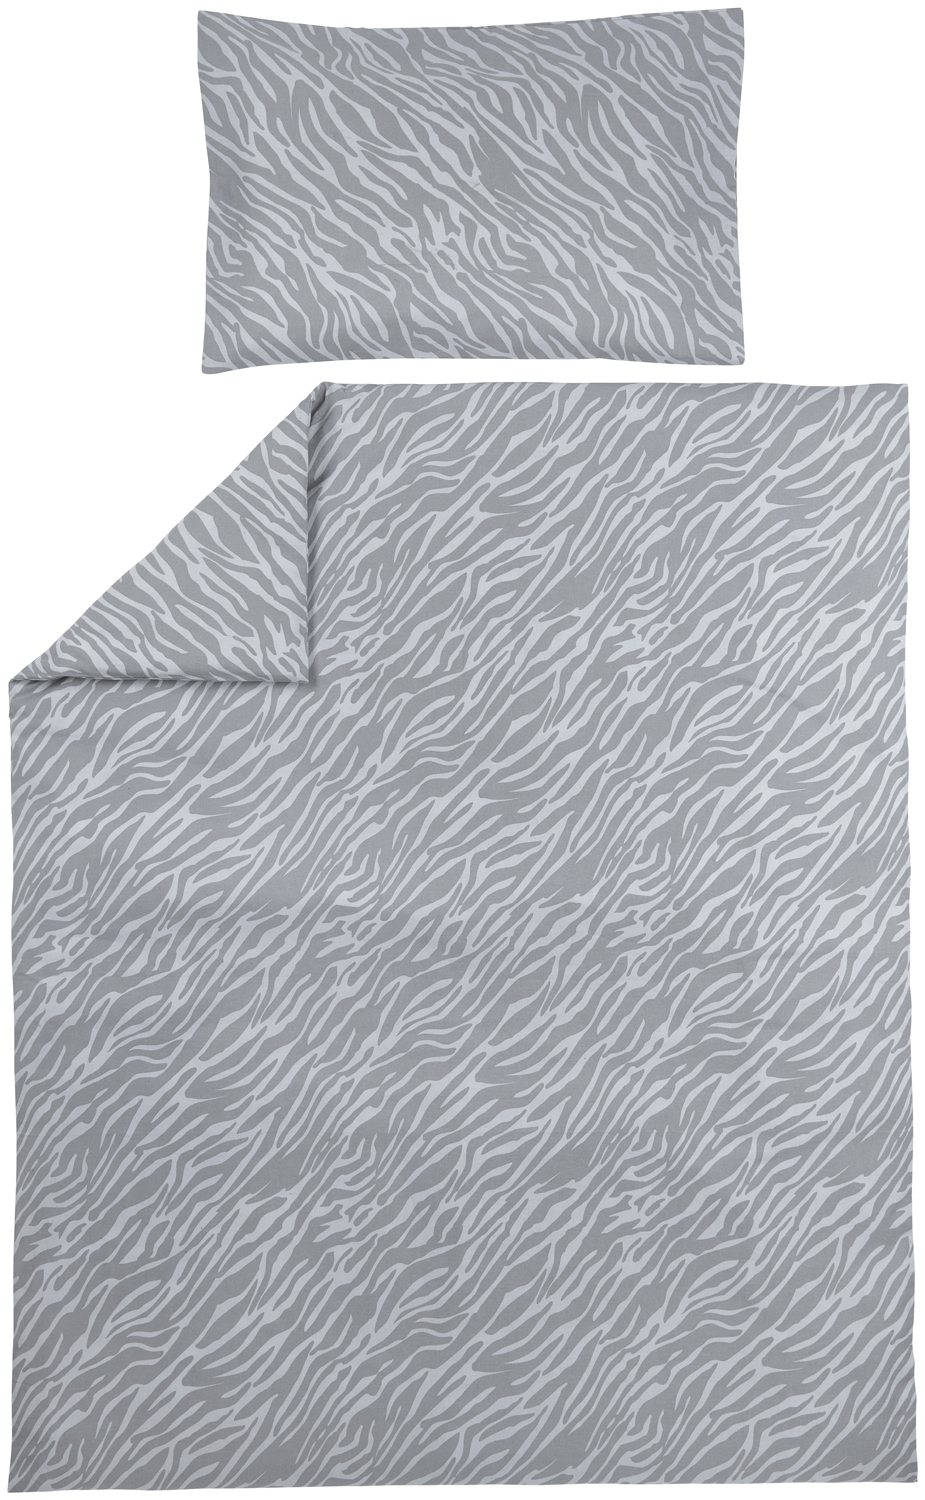 Dekbedovertrek ledikant Zebra - grey - 100x135cm